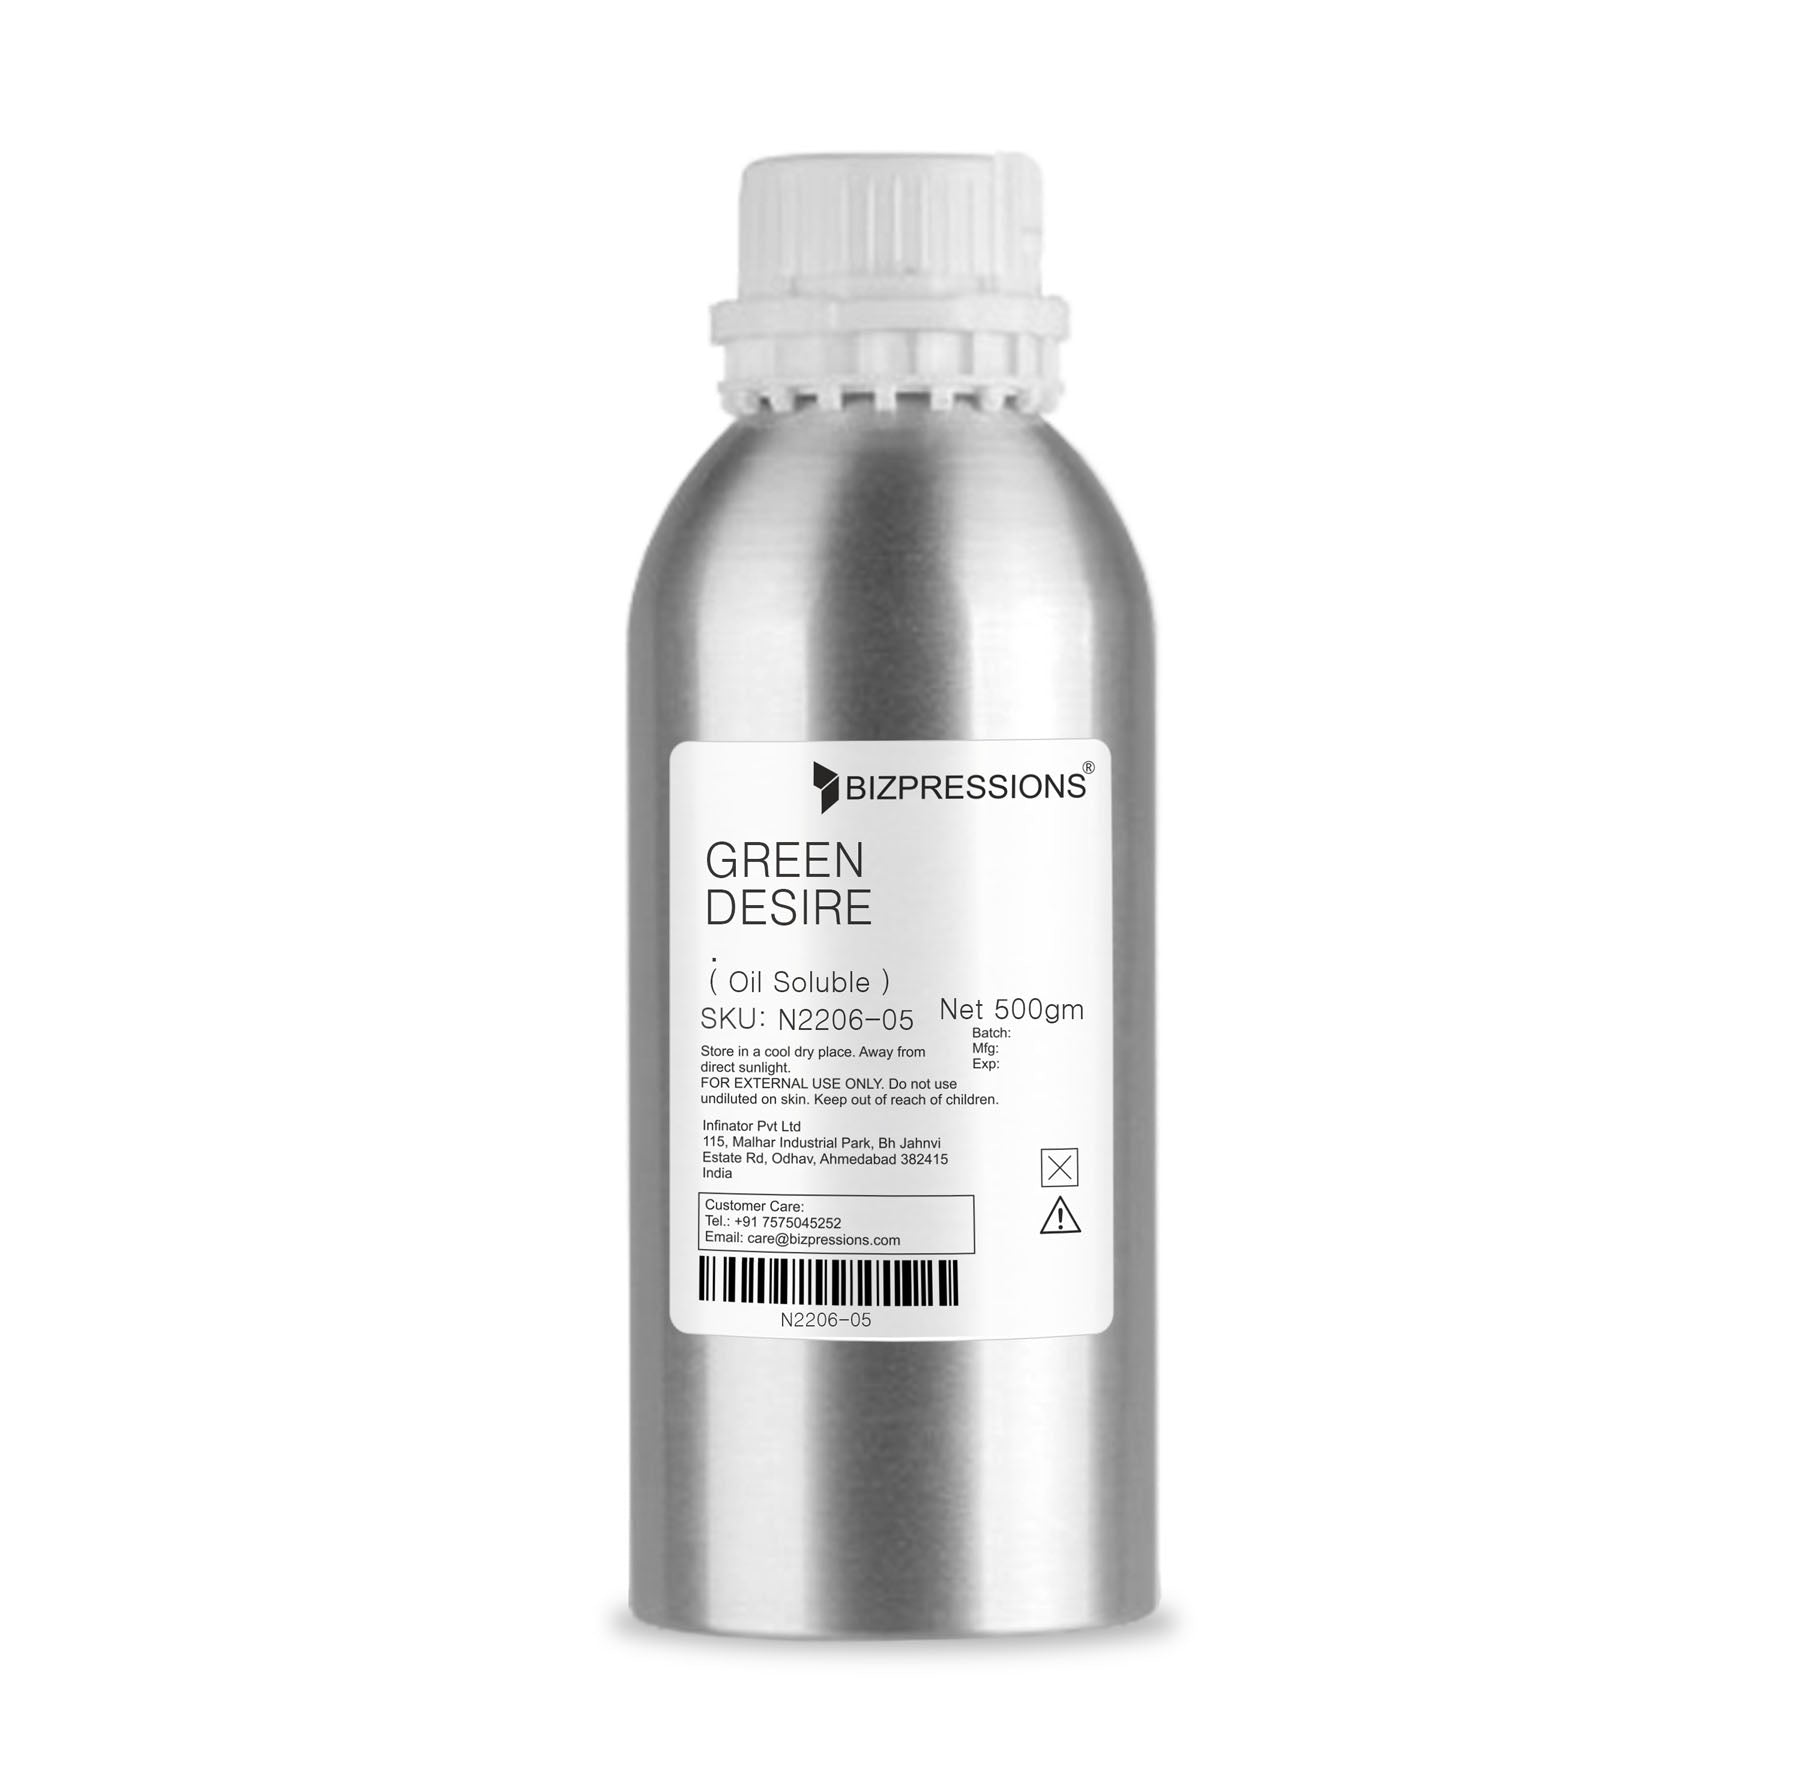 GREEN DESIRE - Fragrance ( Oil Soluble ) - 500 gm